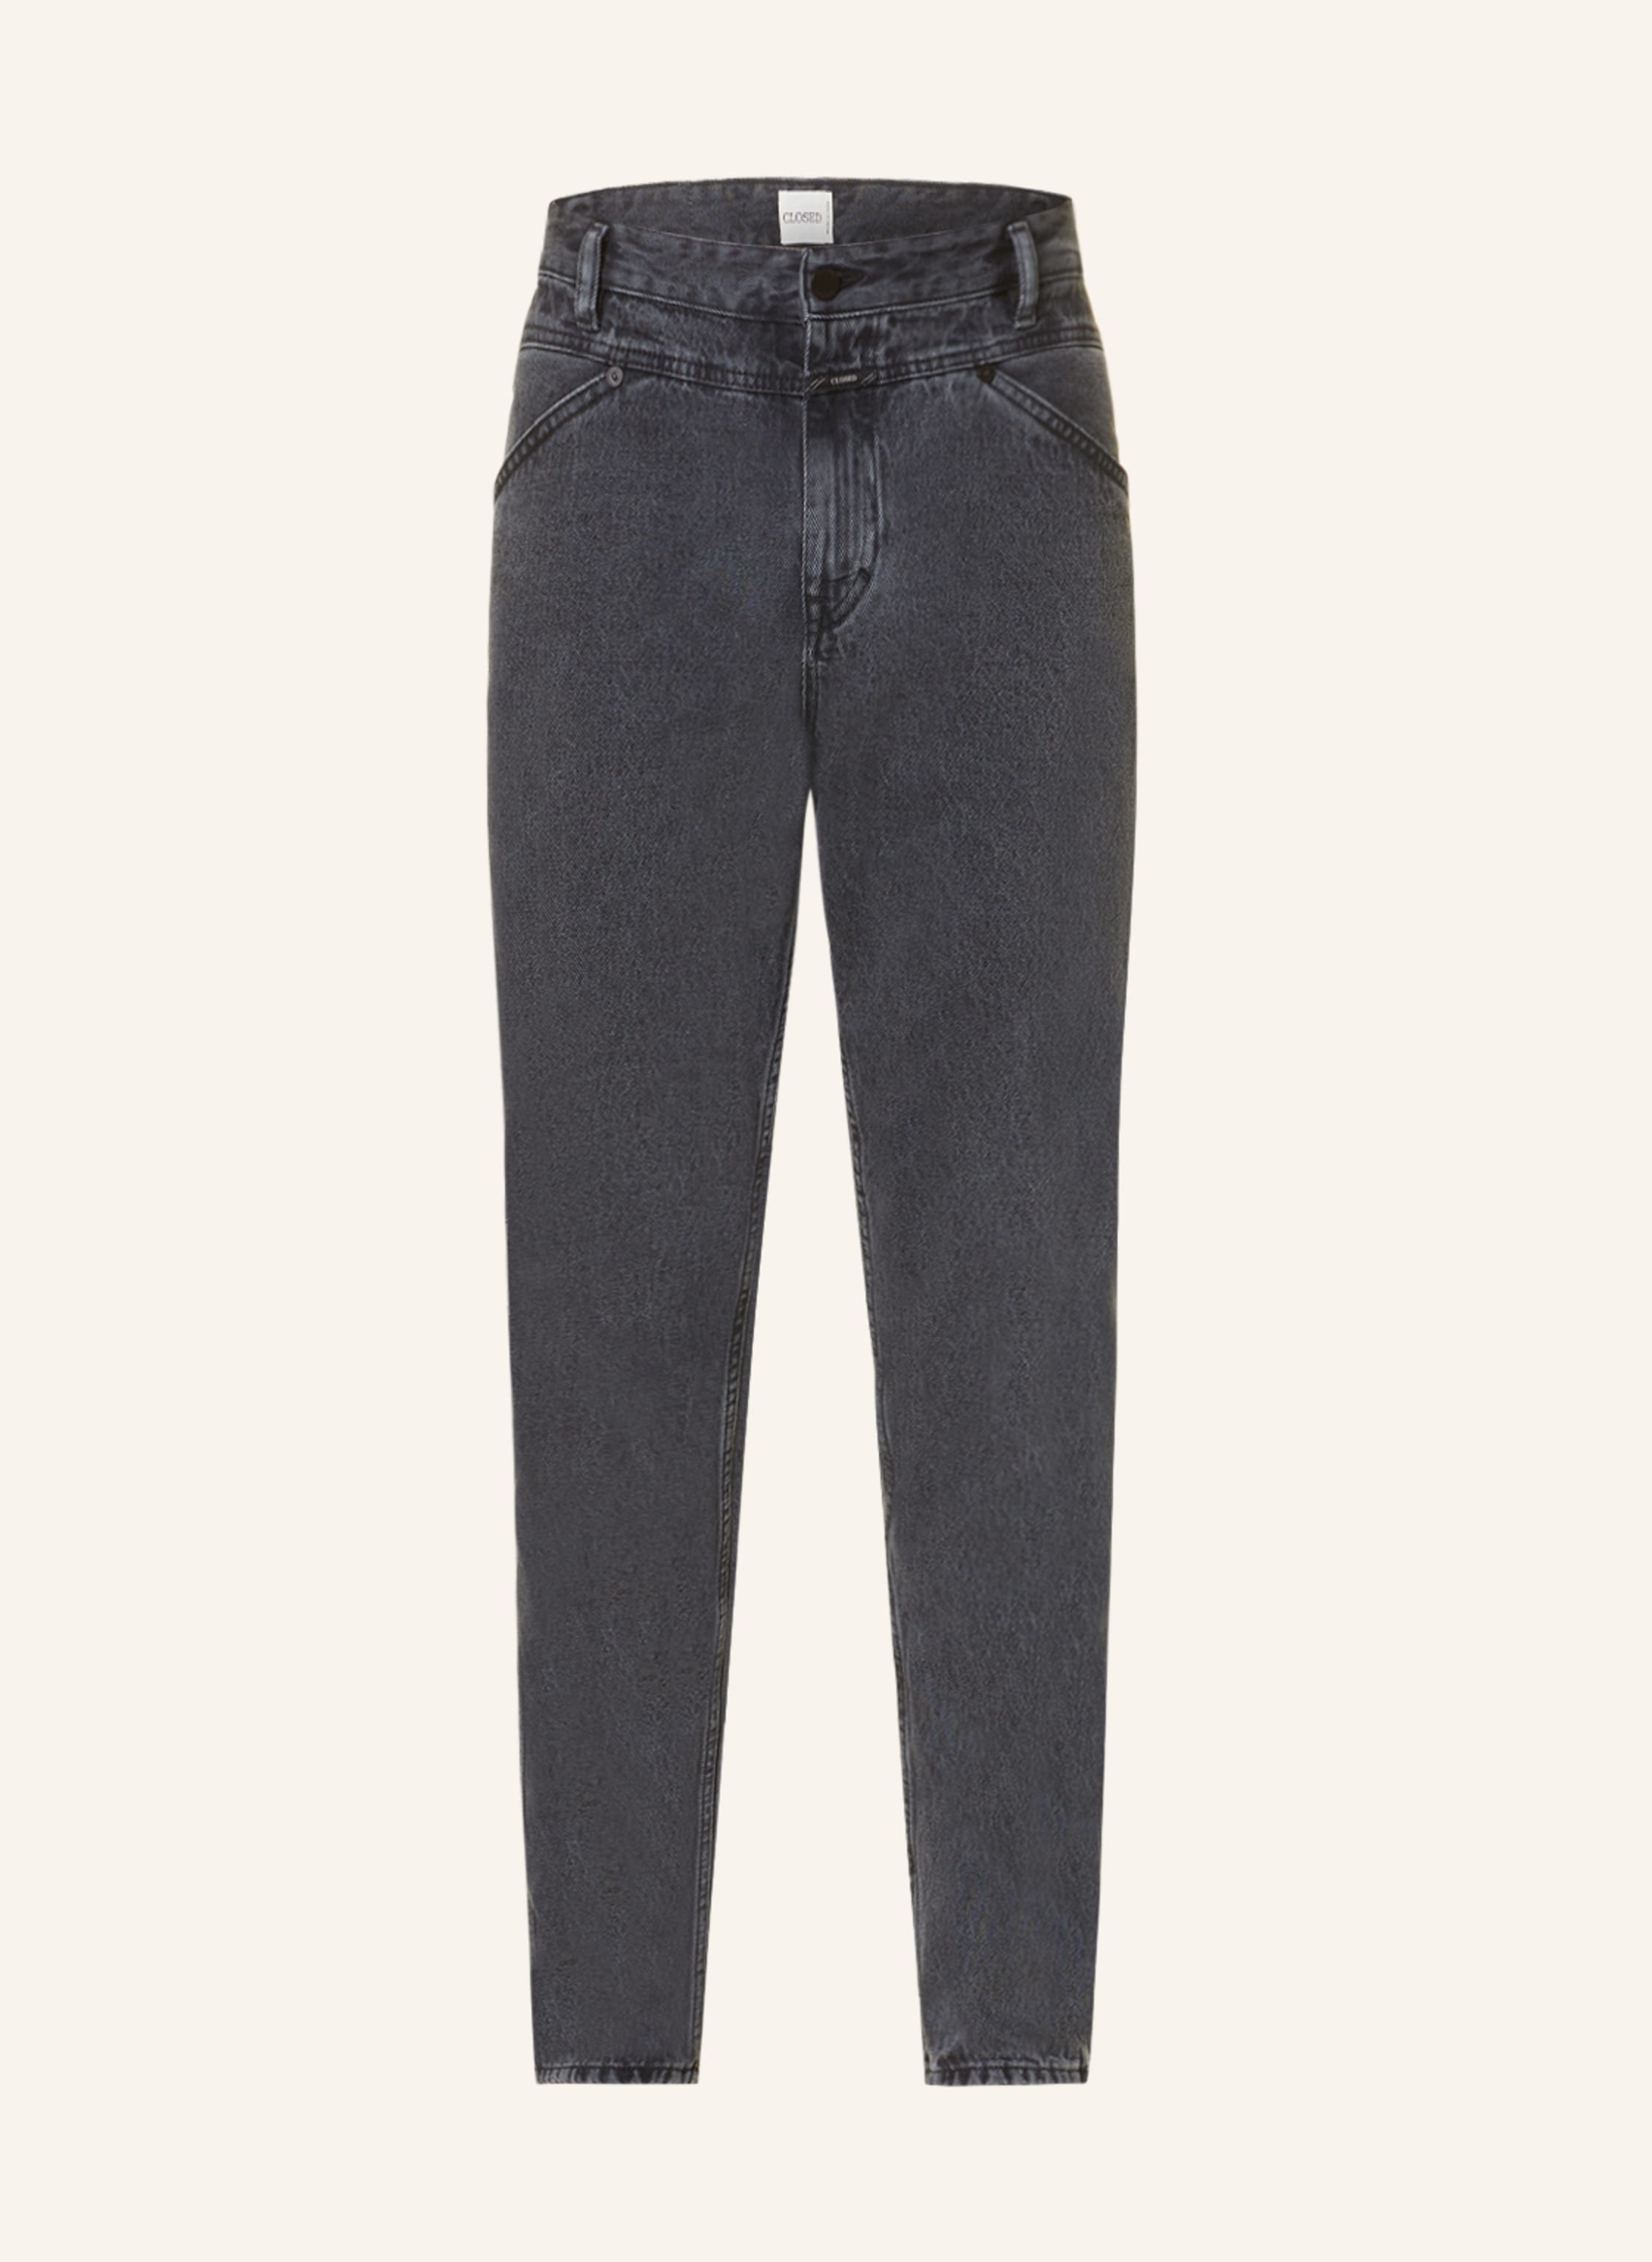 CLOSED Jeans X-LENT Tapered Fit in bbk black/black